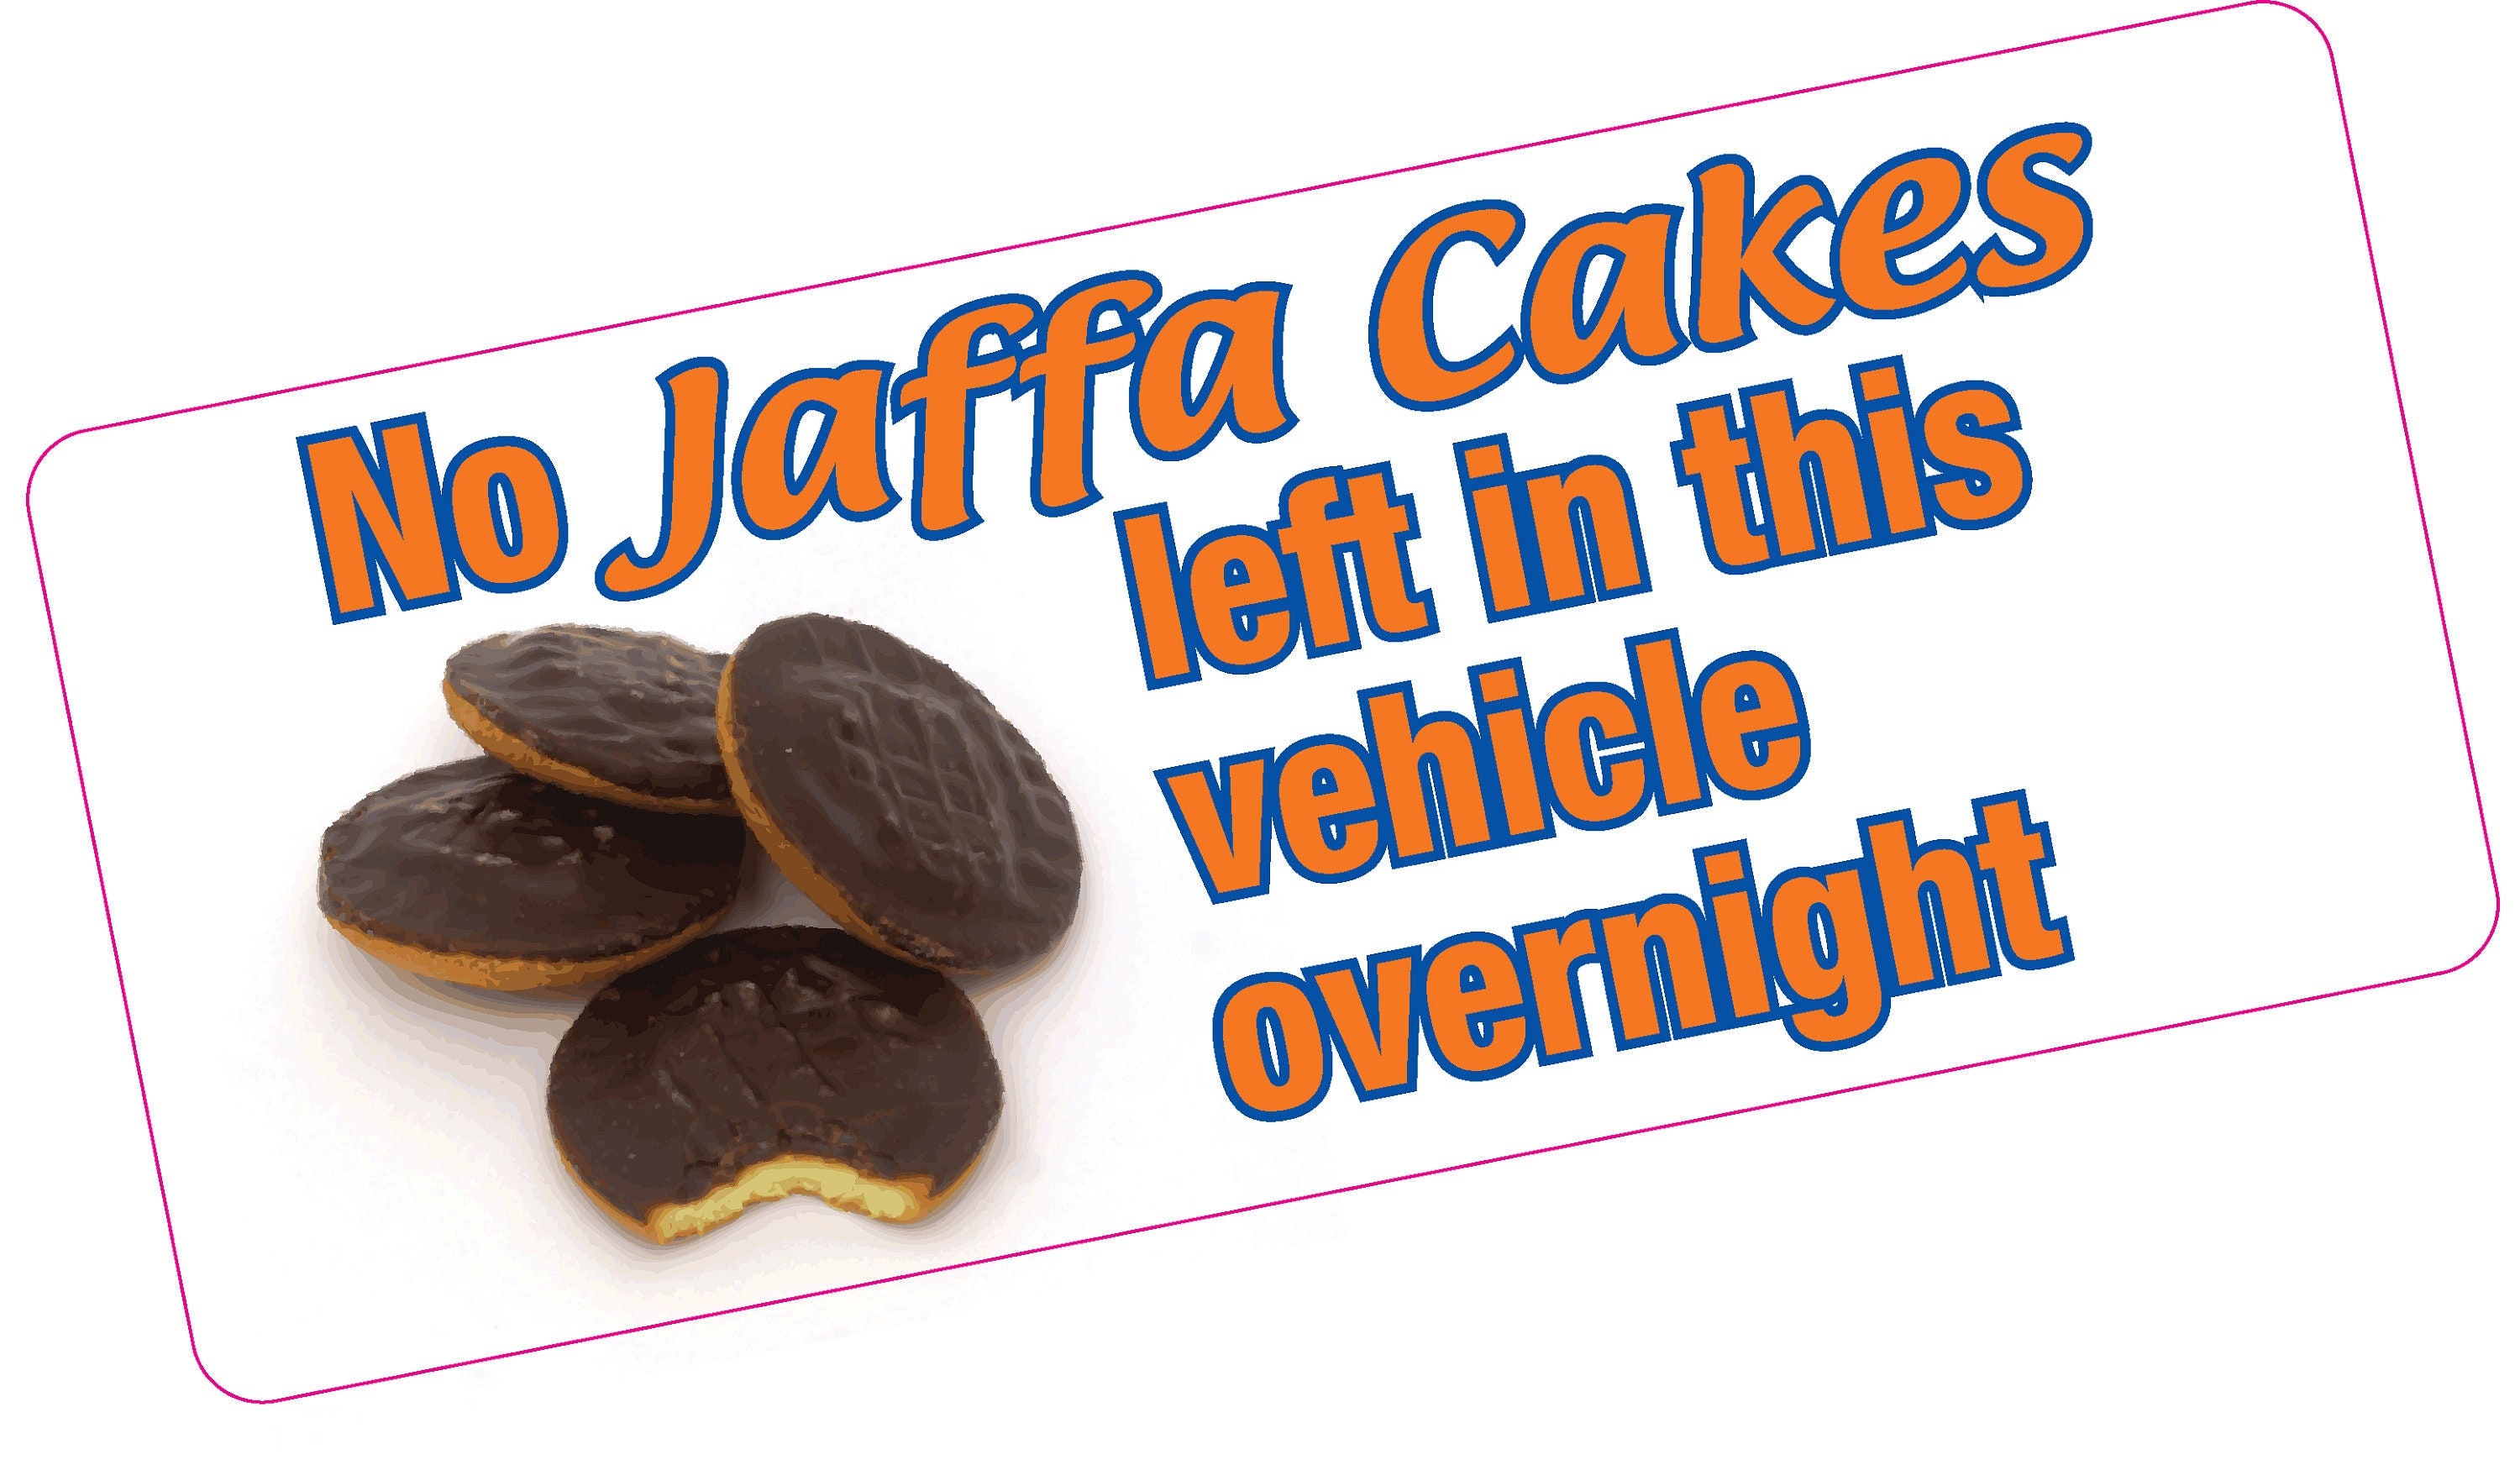 NO JAFFA CAKES LEFT IN VEHICLE OVERNIGHT Funny Car/Van/Bumper/Window Sticker 